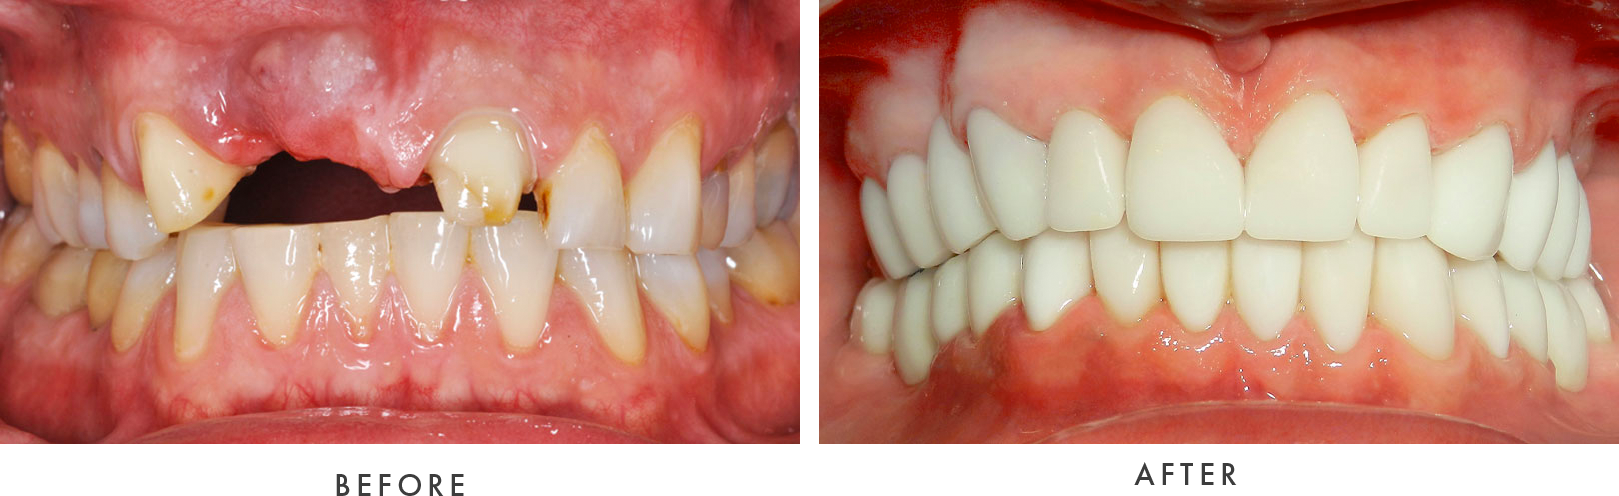 dental implants before & after 003